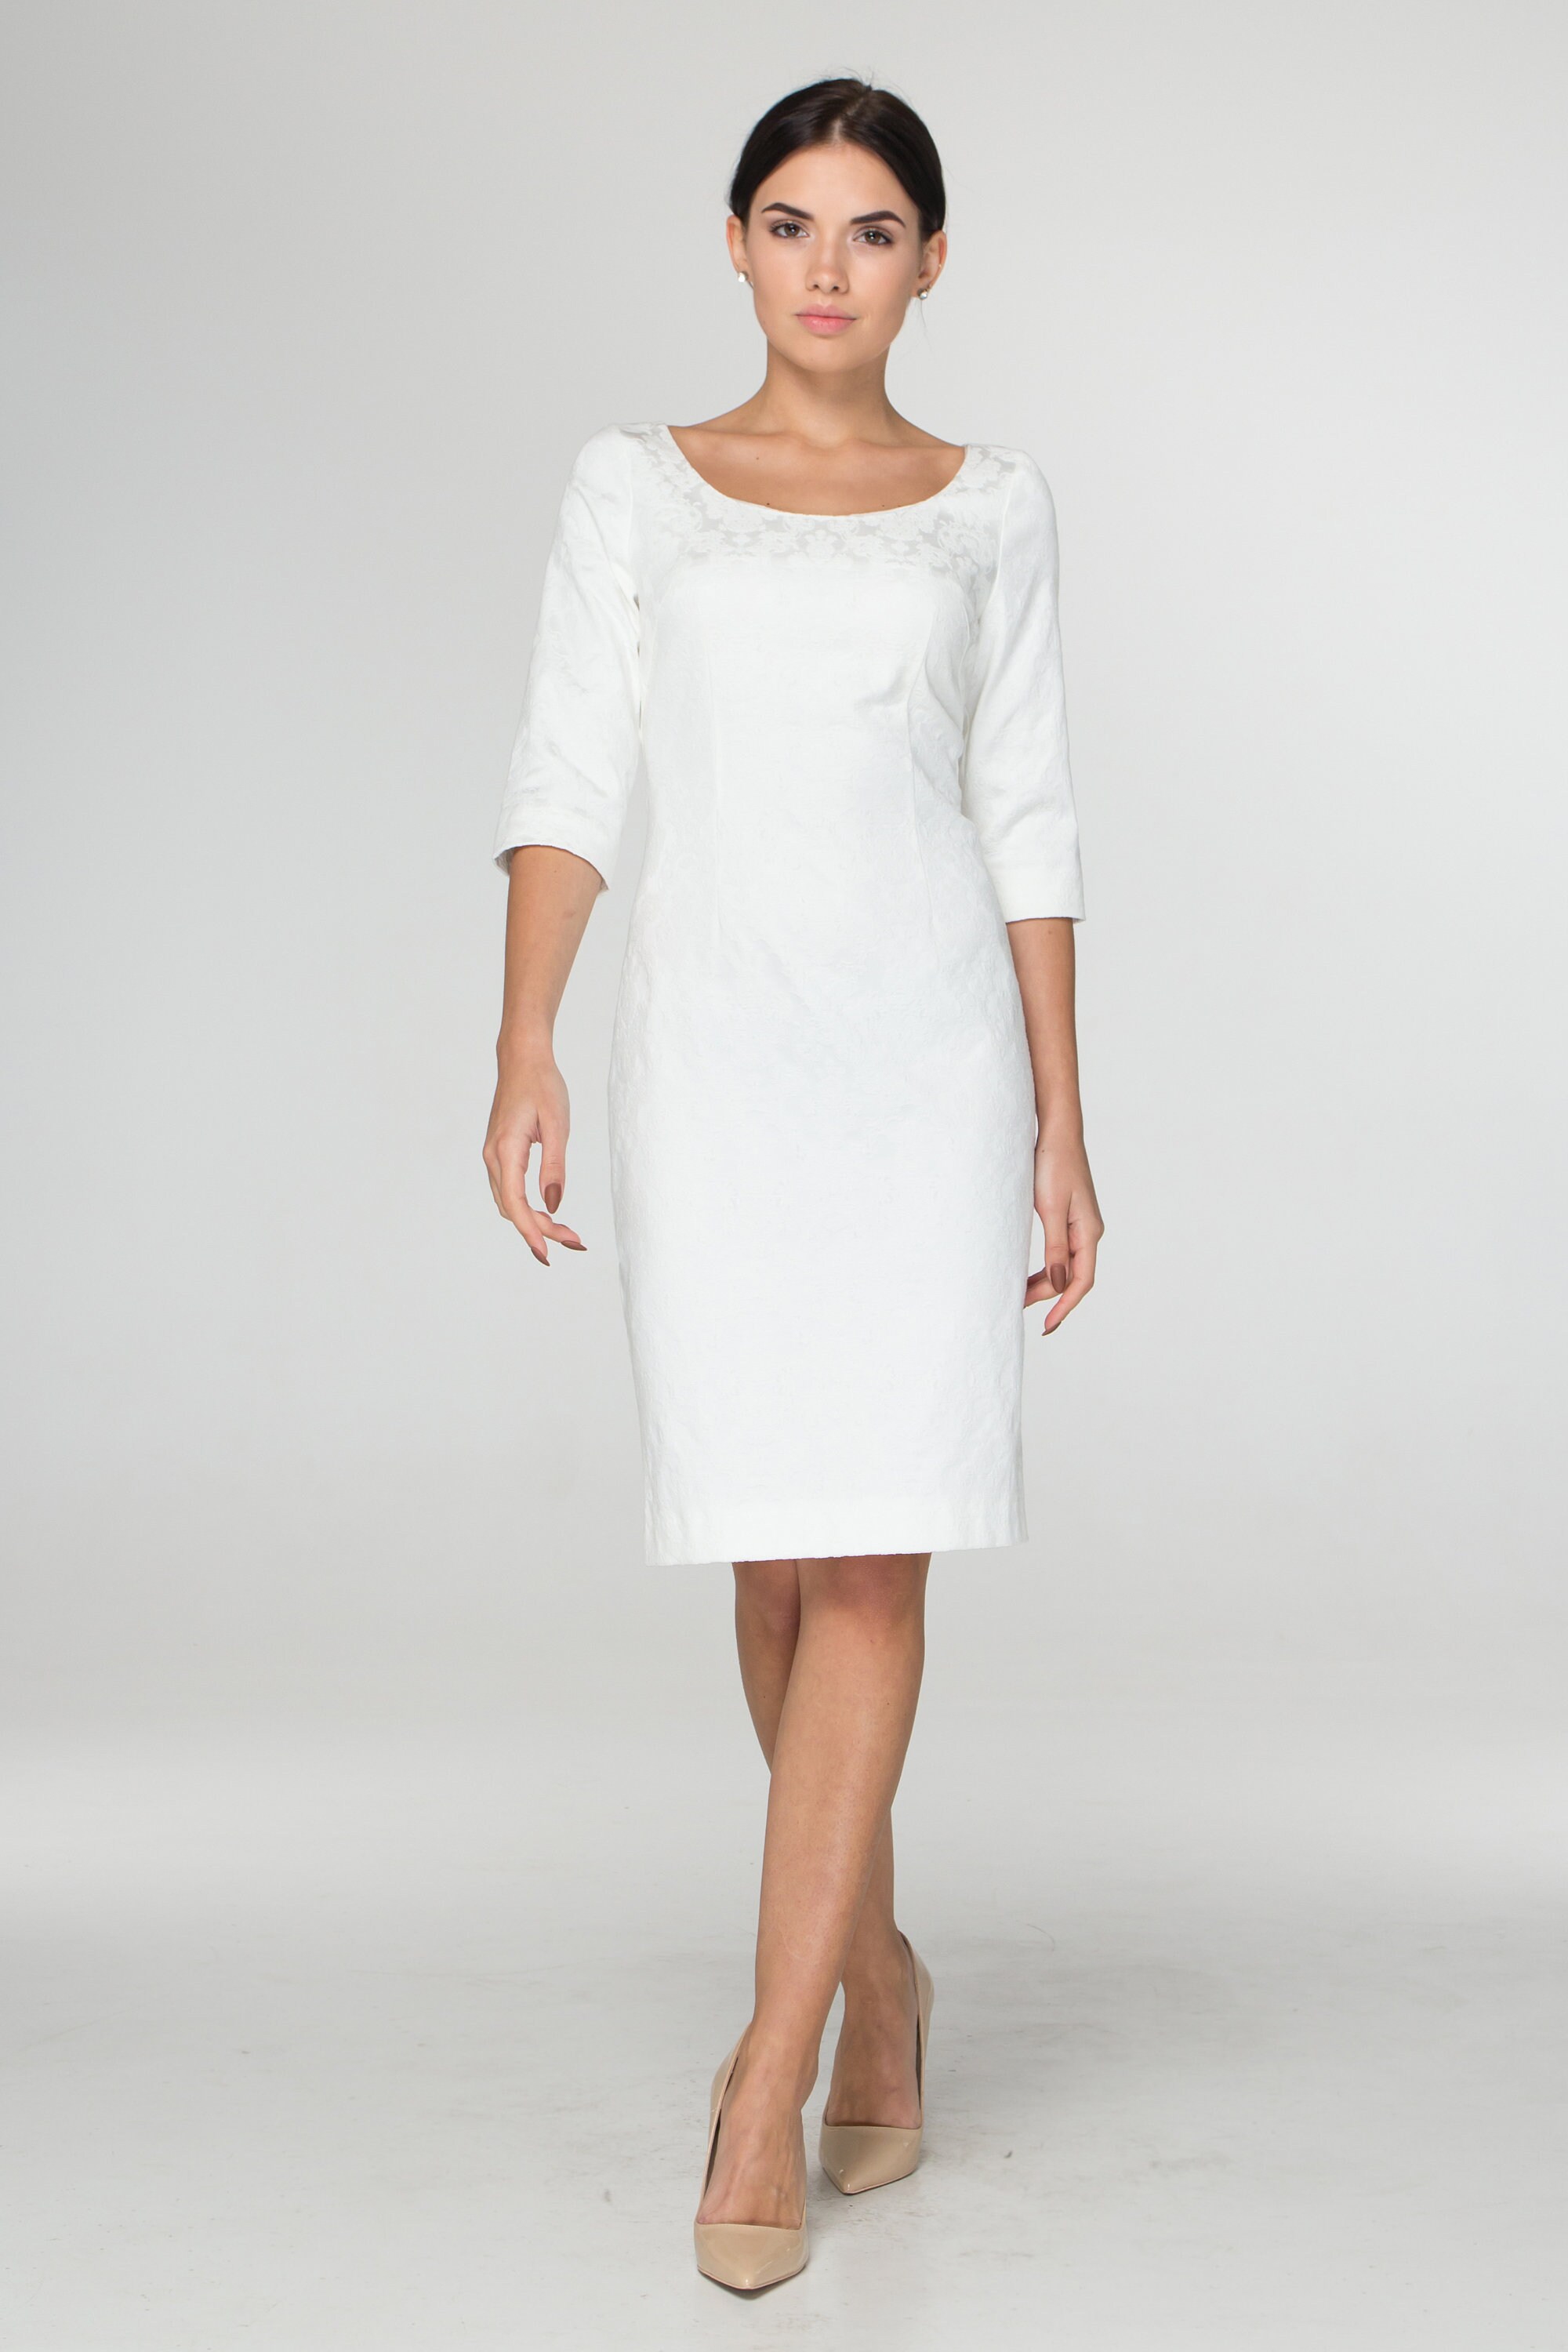 White Cocktail Spring Dress Midi Wedding Party dresses for | Etsy